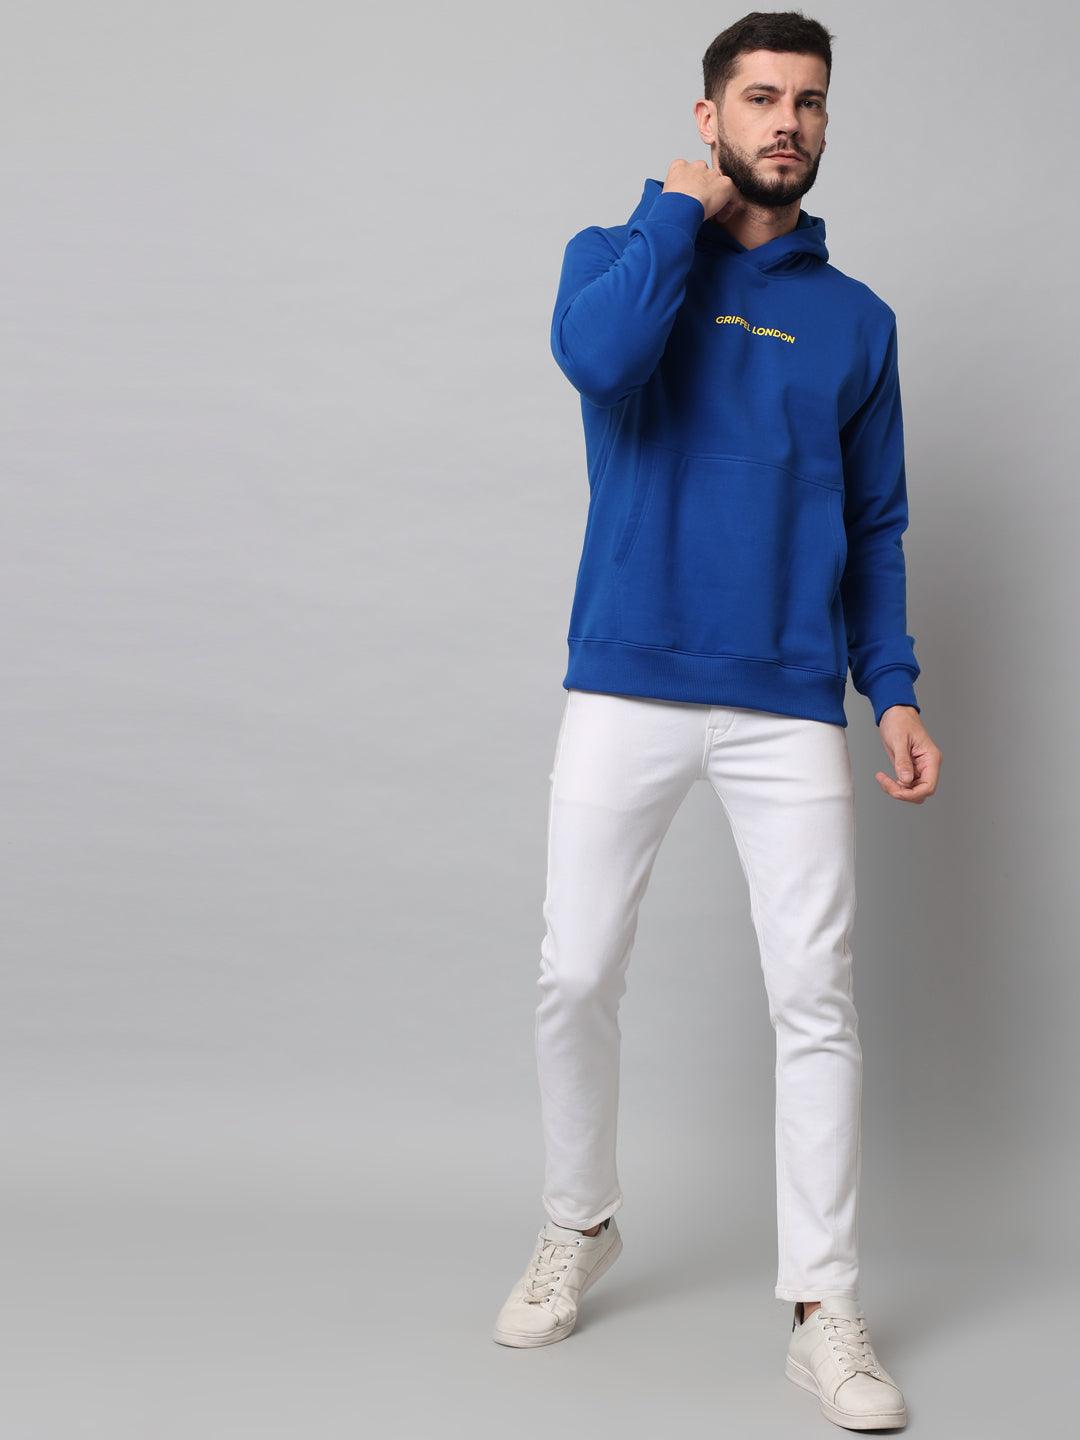 Griffel Men's Royal Cotton Front Logo Fleece Hoody Sweatshirt with Full Sleeve - griffel